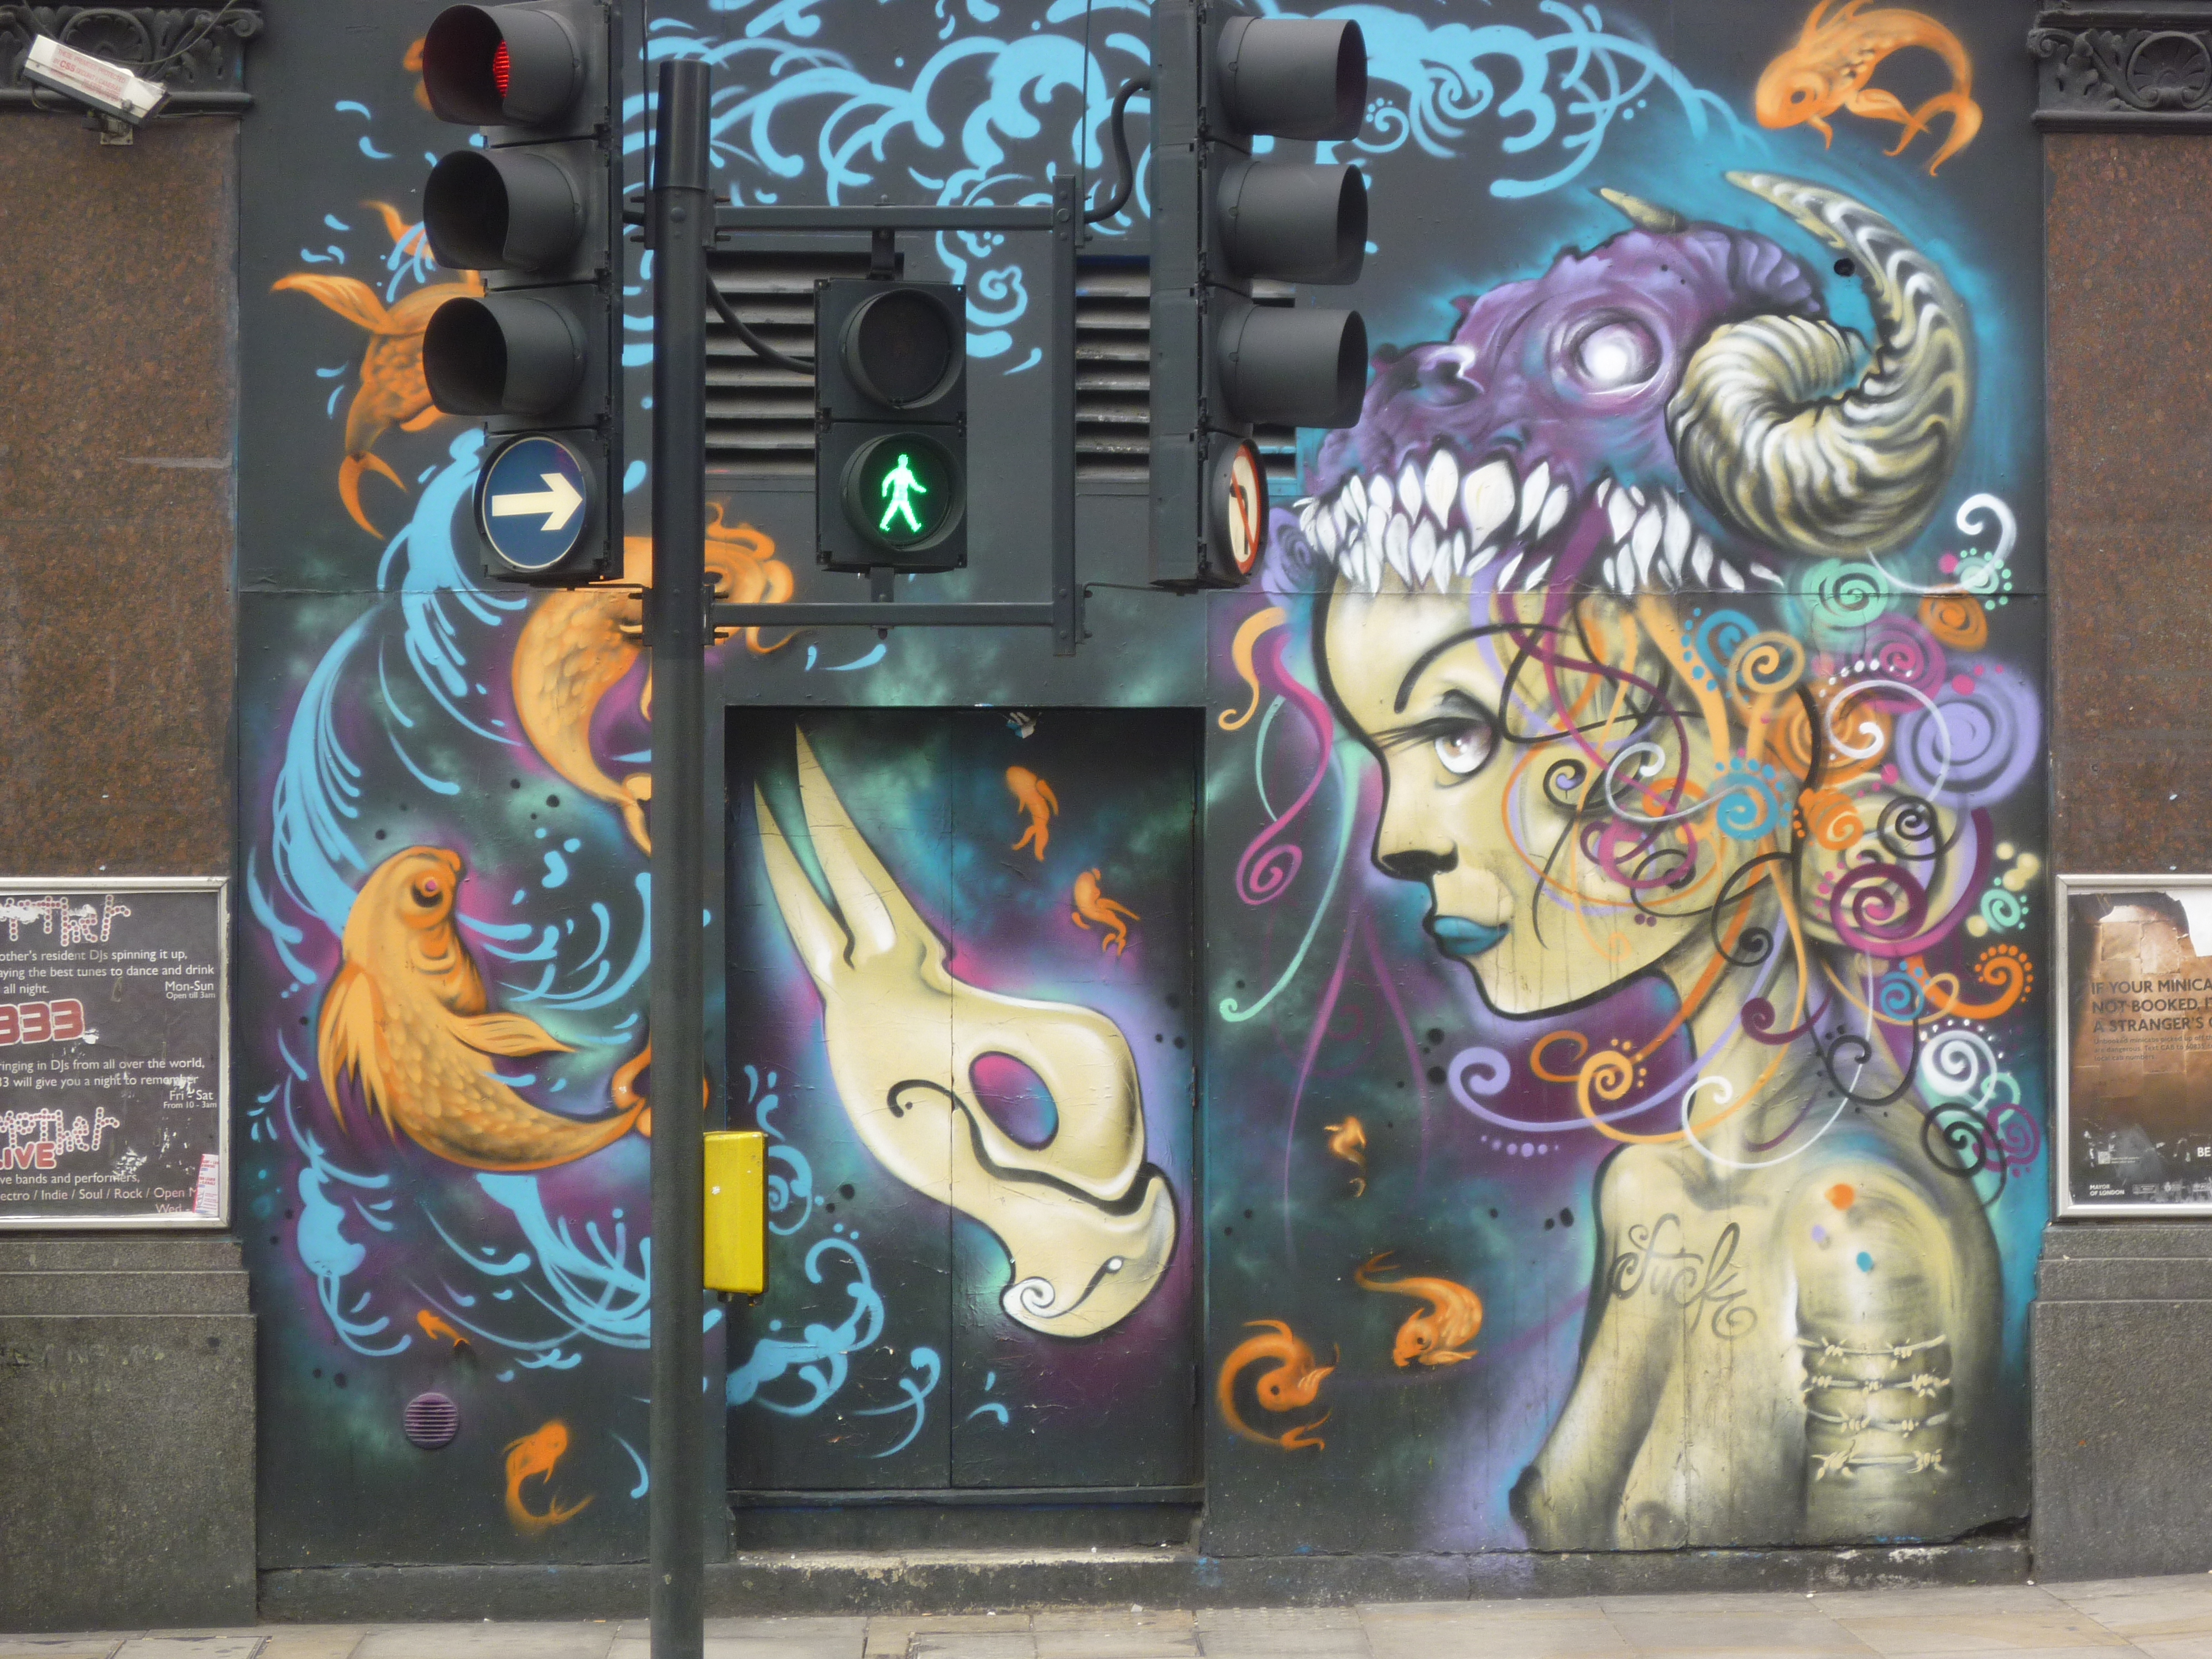 Street Art in London 2 - near Hoxton Sq.